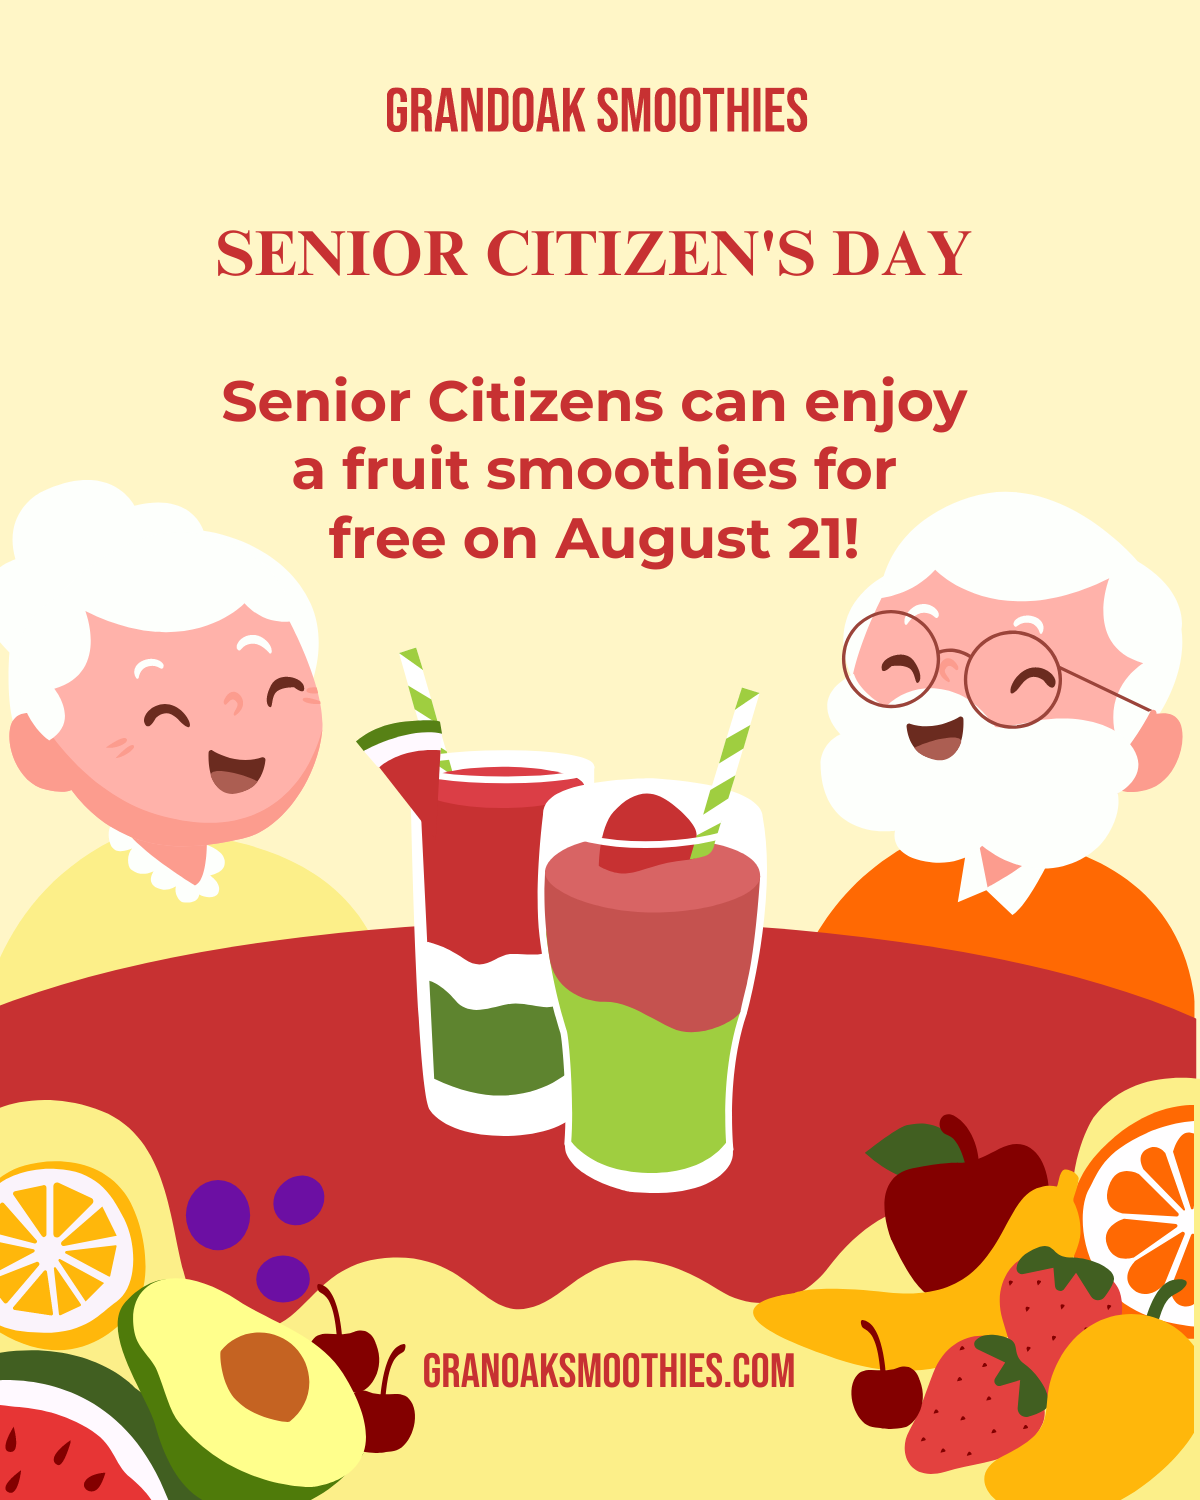 Free Senior Citizen's Day Facebook Post Template